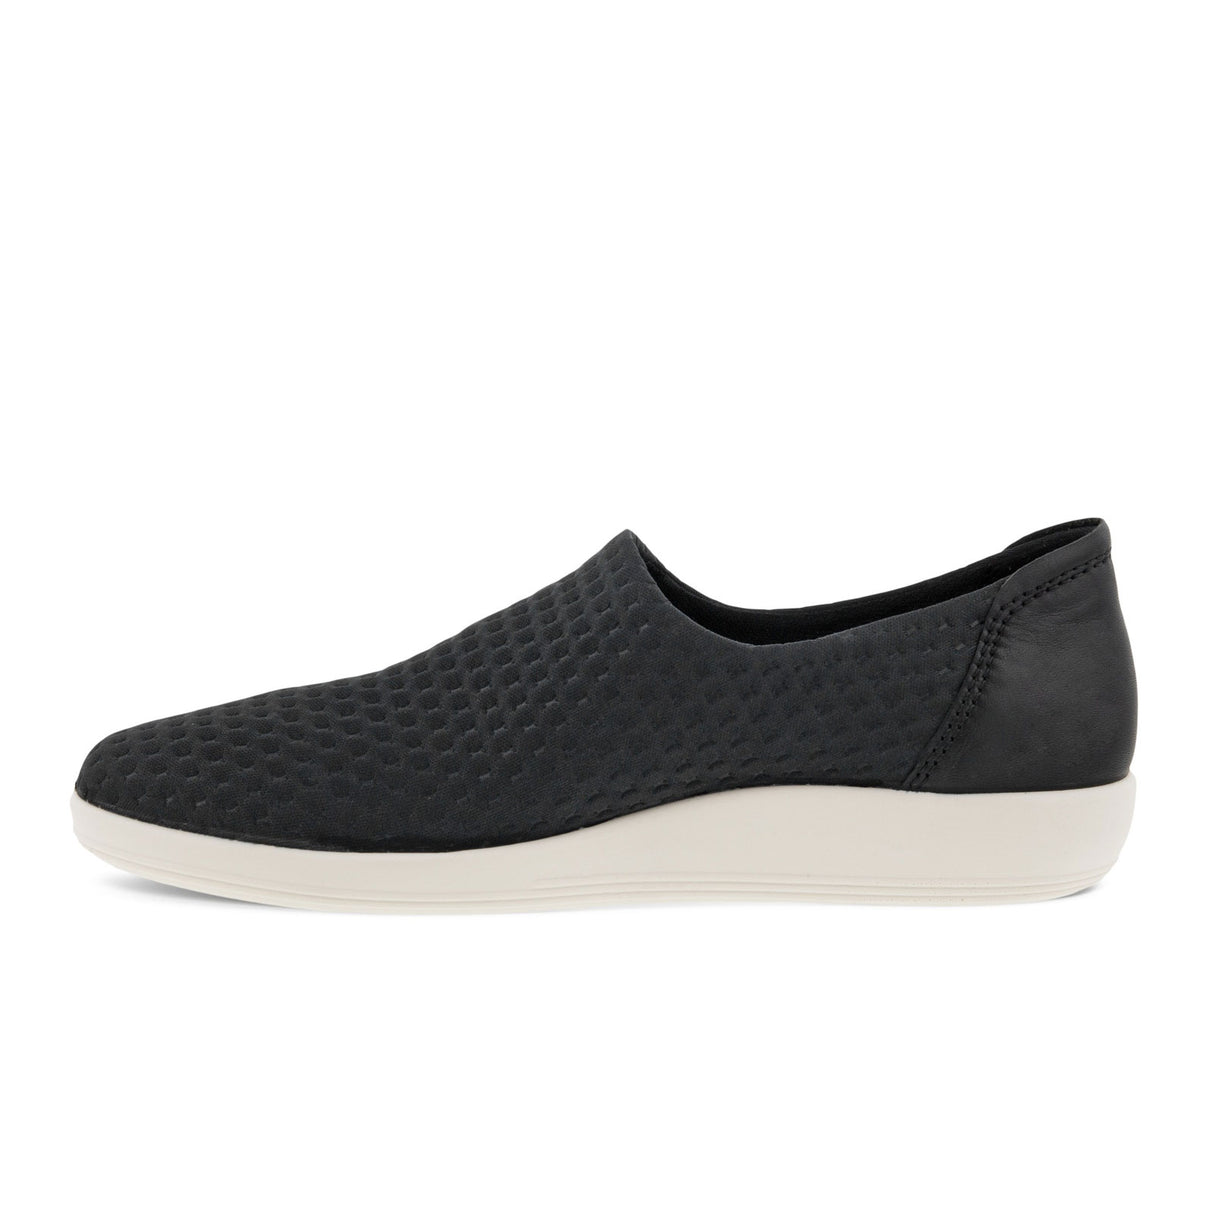 ECCO Soft 2 Slip On (Women) - Black/Black Dress-Casual - Slip-Ons - The Heel Shoe Fitters